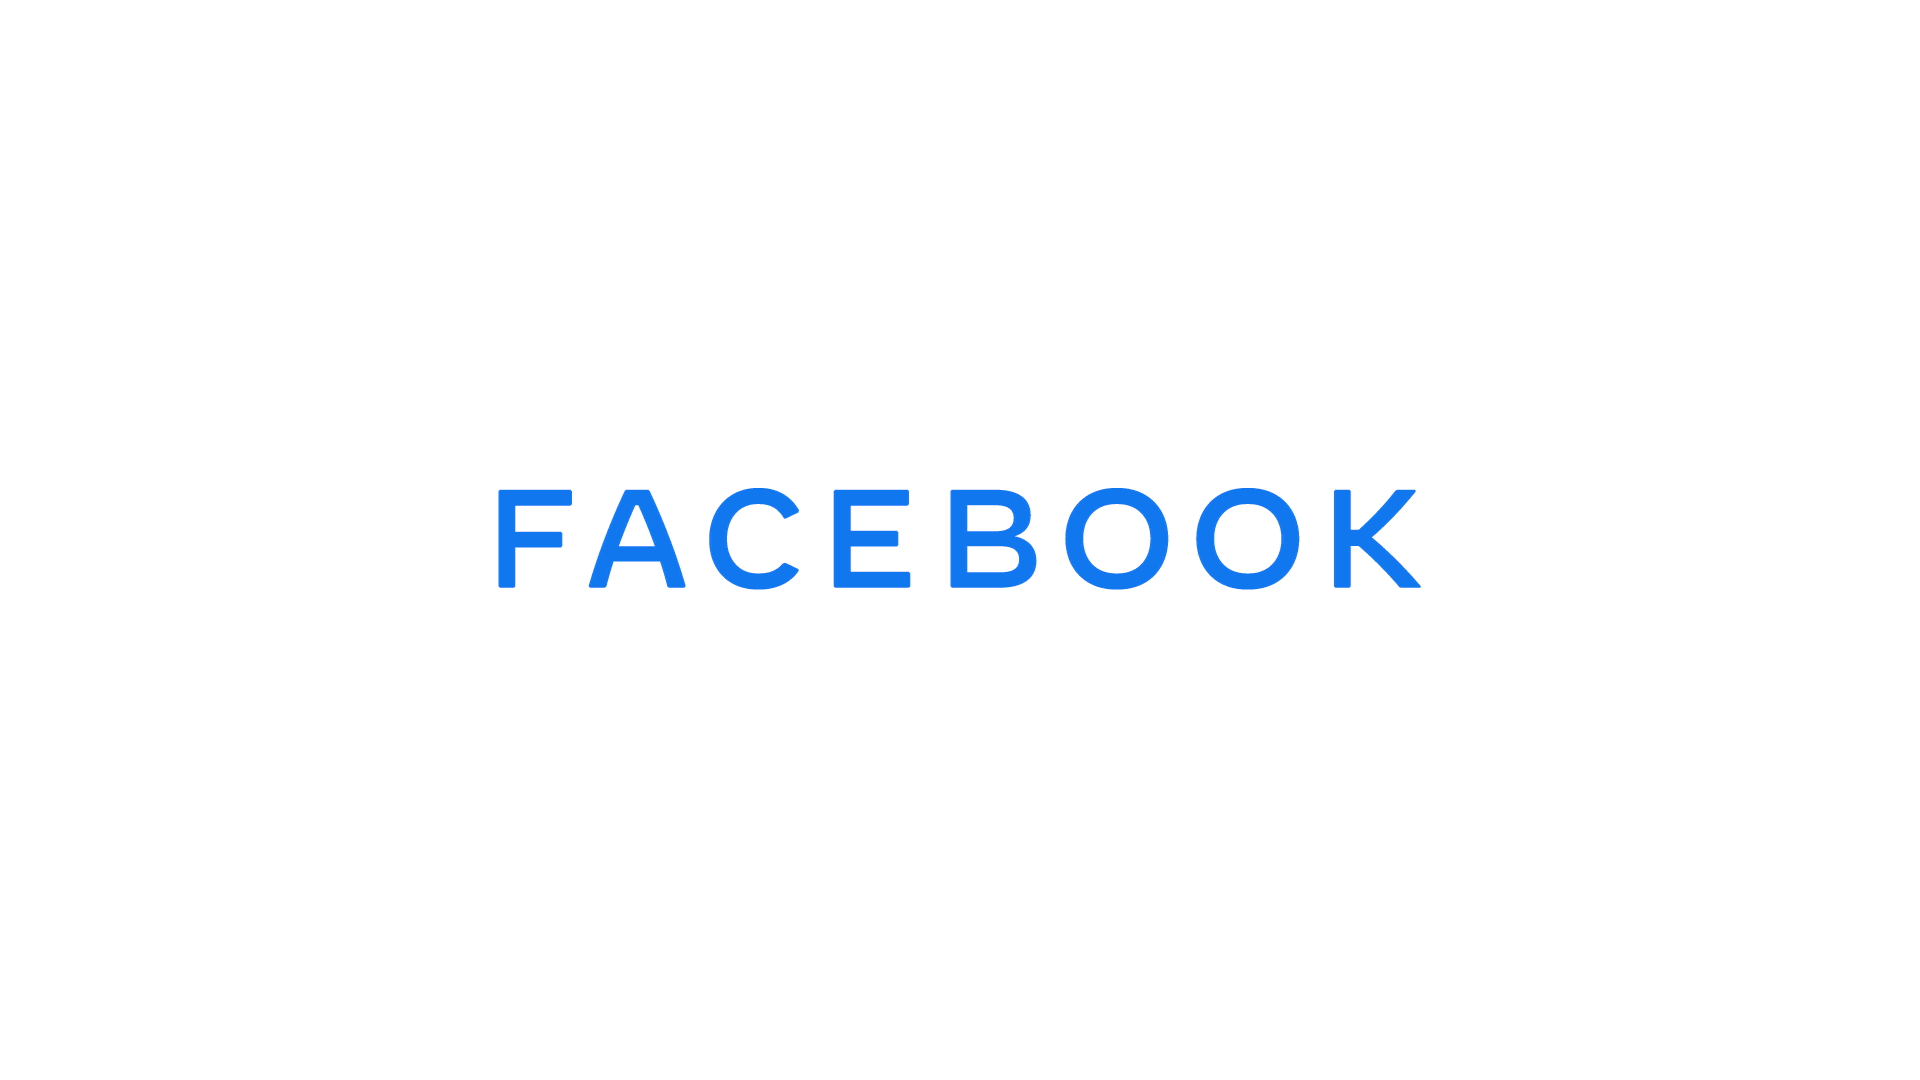 Take a look at facebook's new logo